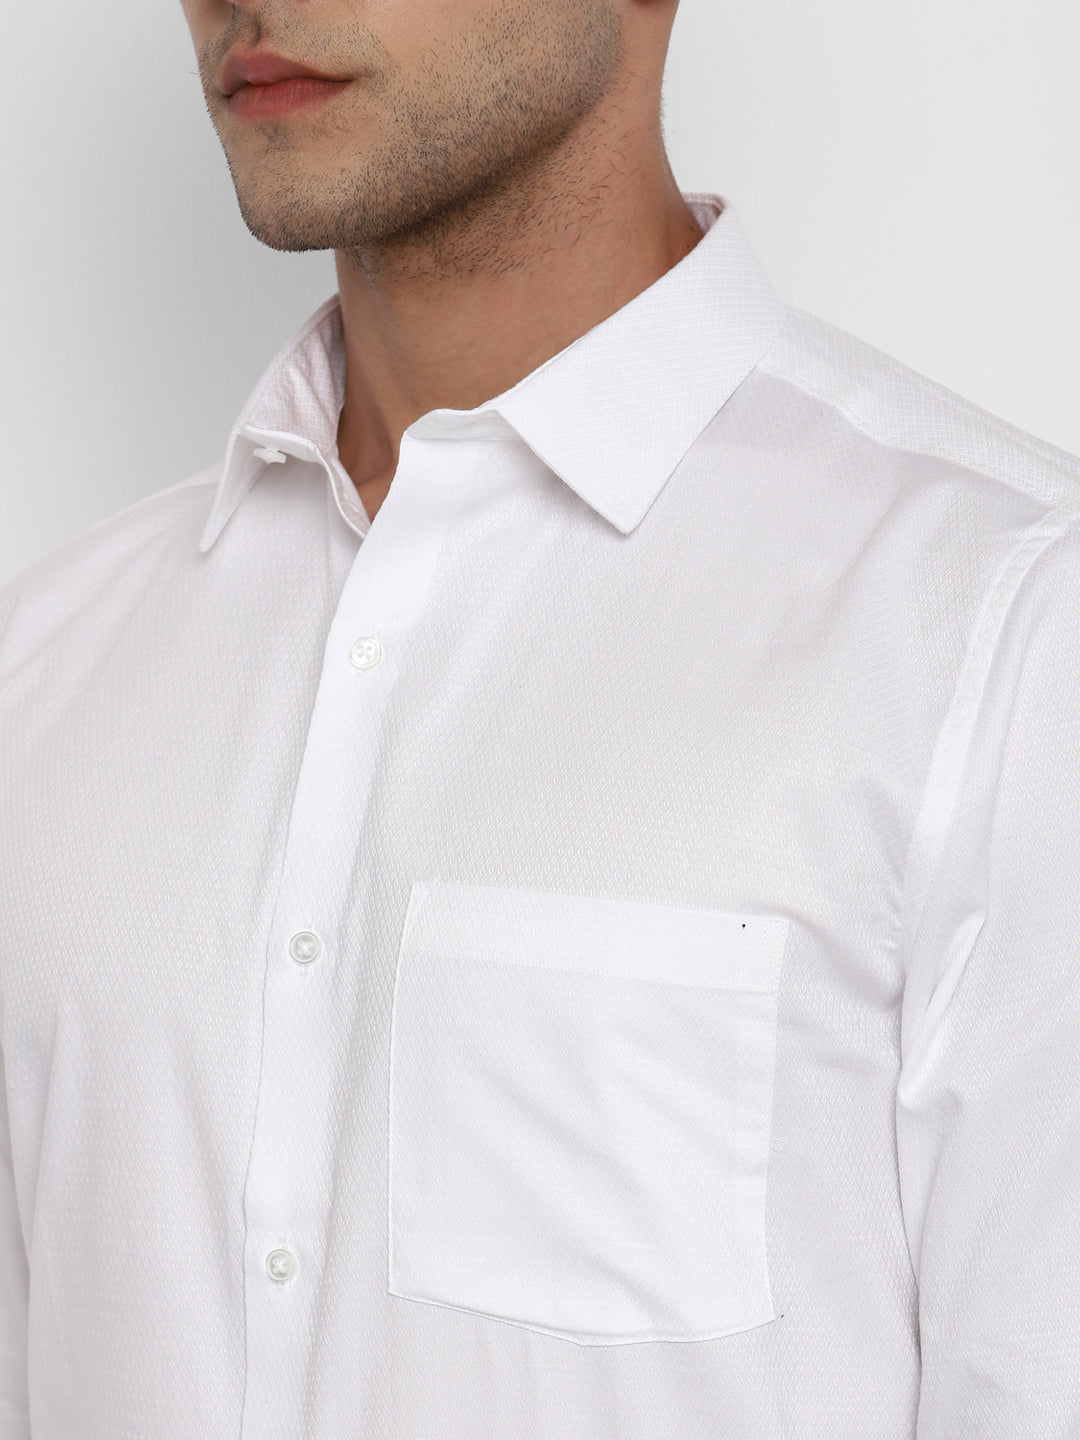 Cotton White Self Design Slim Fit Forml Shirt